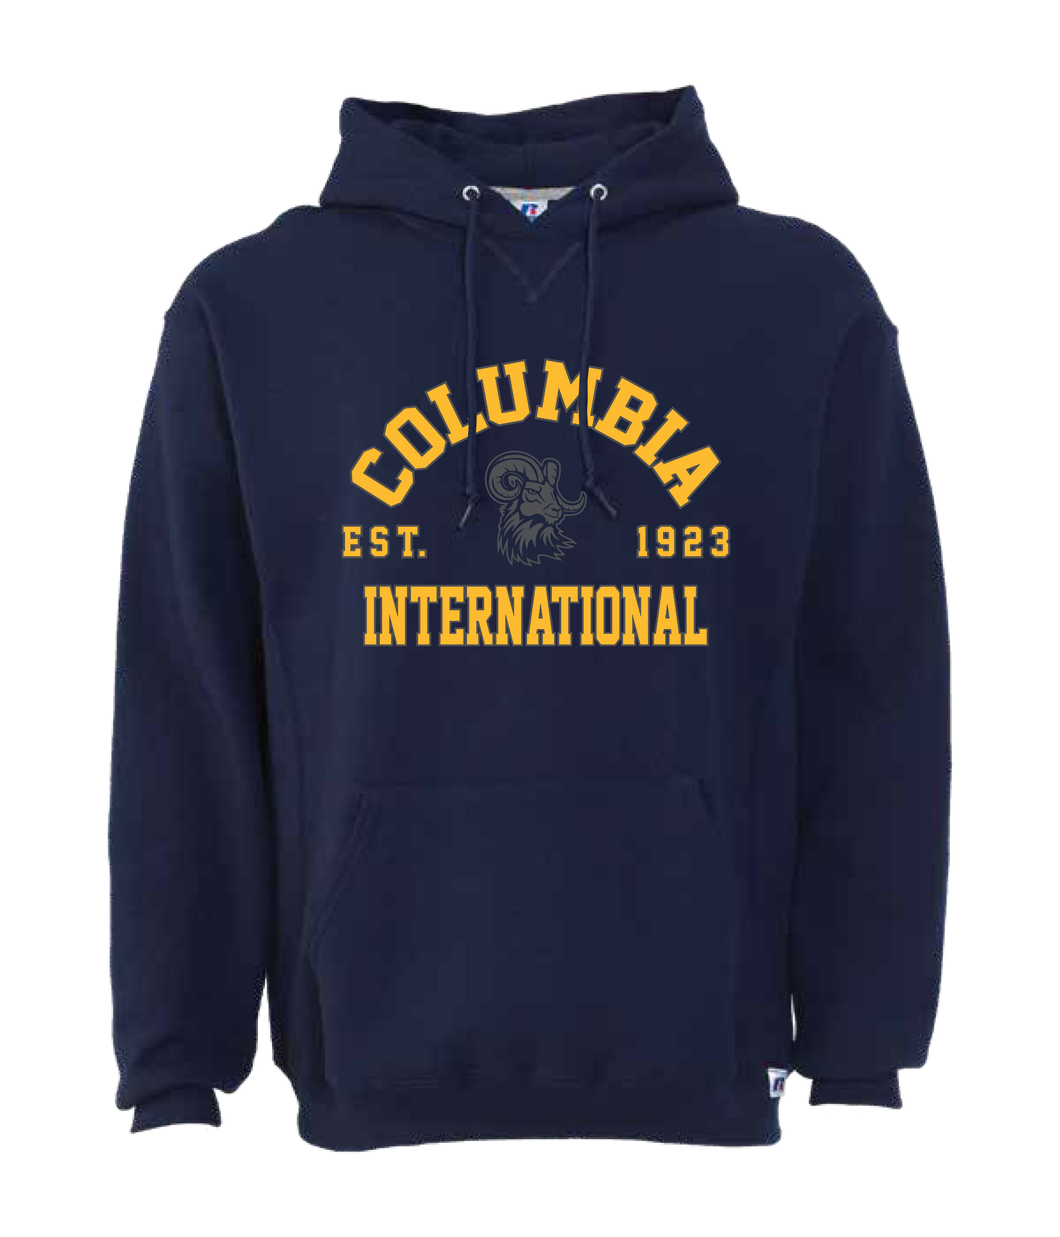 Hooded Sweatshirt, Navy, Columbia over International straight ram logo in the background EST 1923